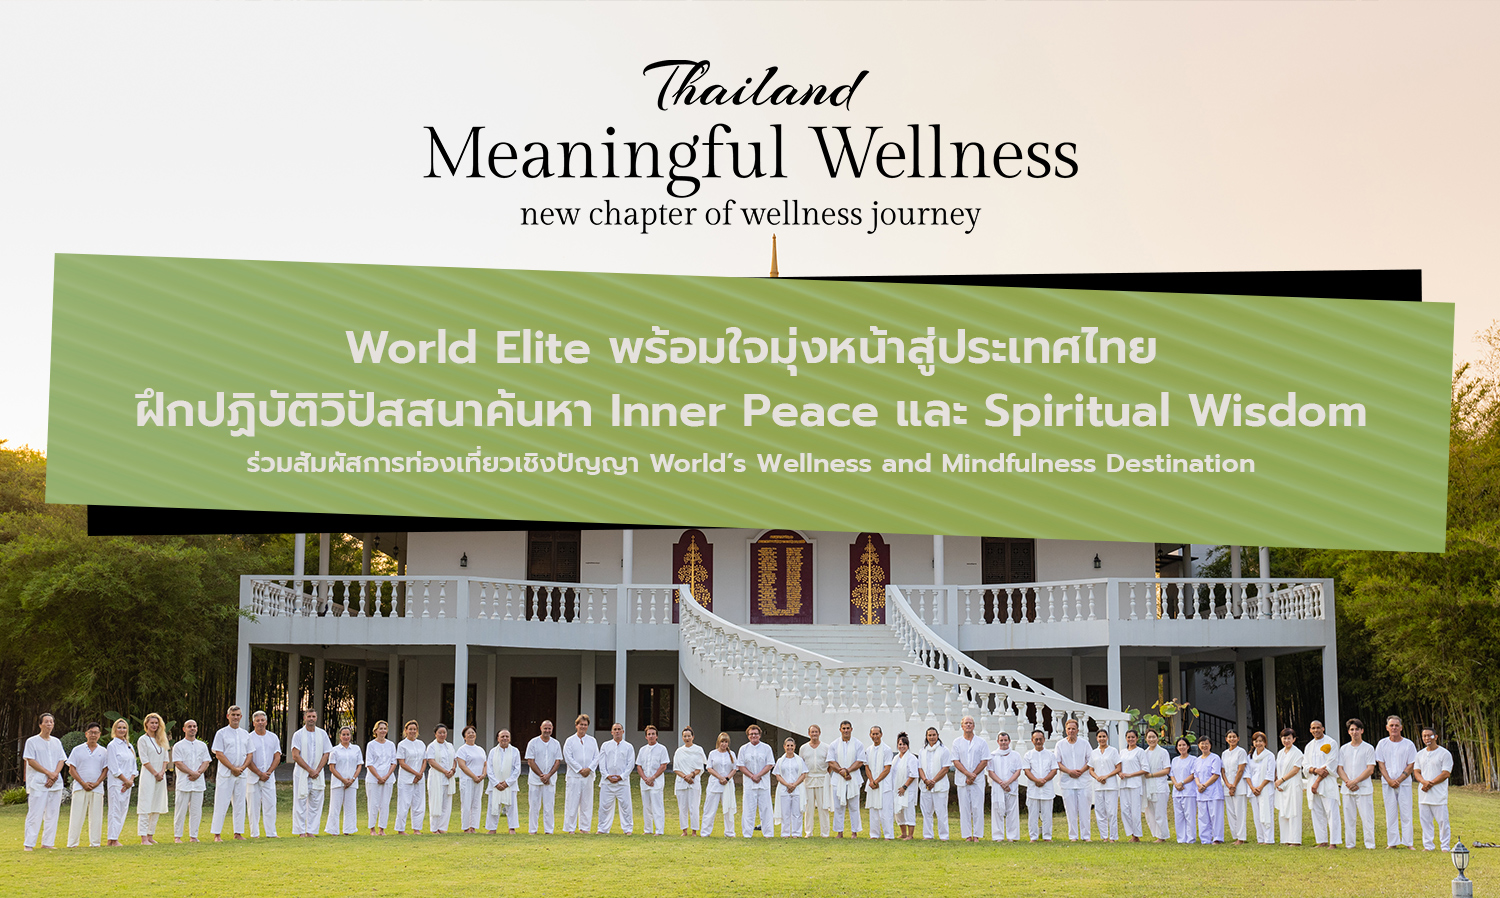 World Elite พร้อมใจมุ่งหน้าสู่ประเทศไทย ฝึกปฏิบัติวิปัสสนาค้นหา Inner Peace และ Spiritual Wisdom ร่วมสัมผัสการท่องเที่ยวเชิงปัญญา World’s Wellness and Mindfulness Destination